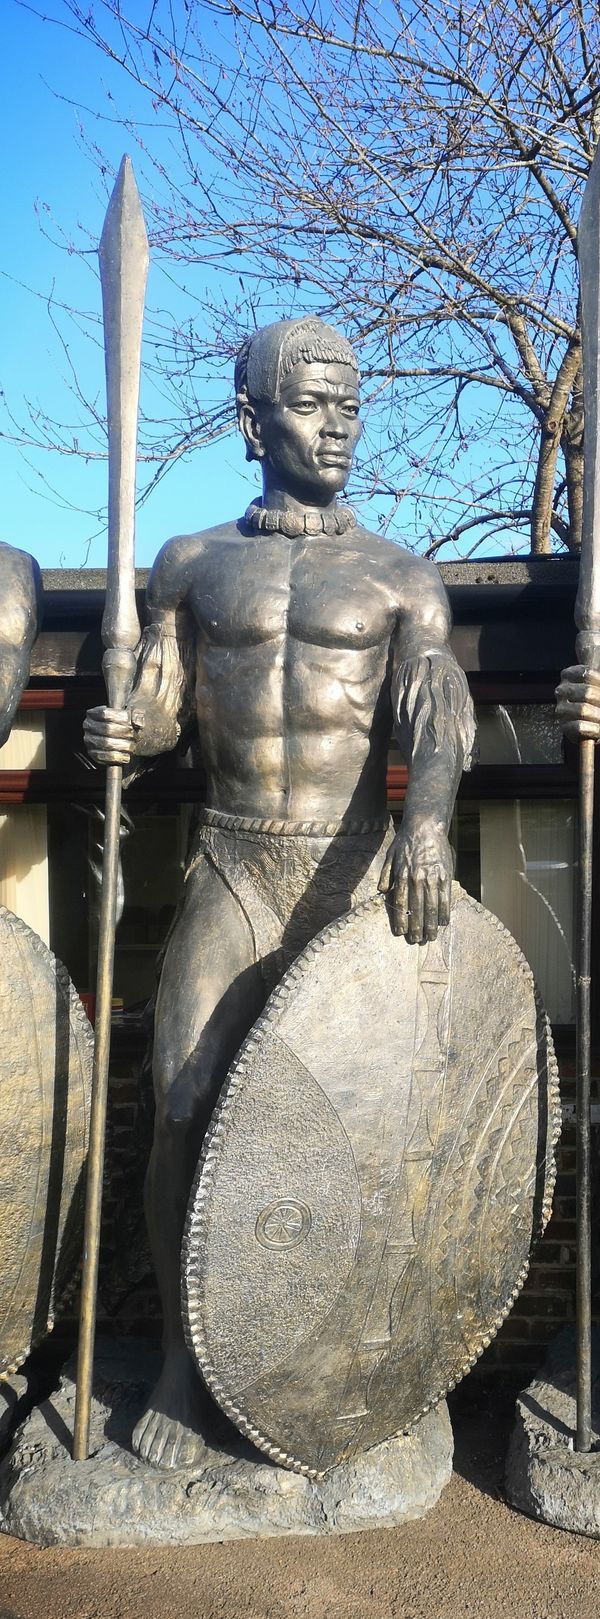 A similar impressive and colossal patinated fibreglass figure of a Zulu warrior